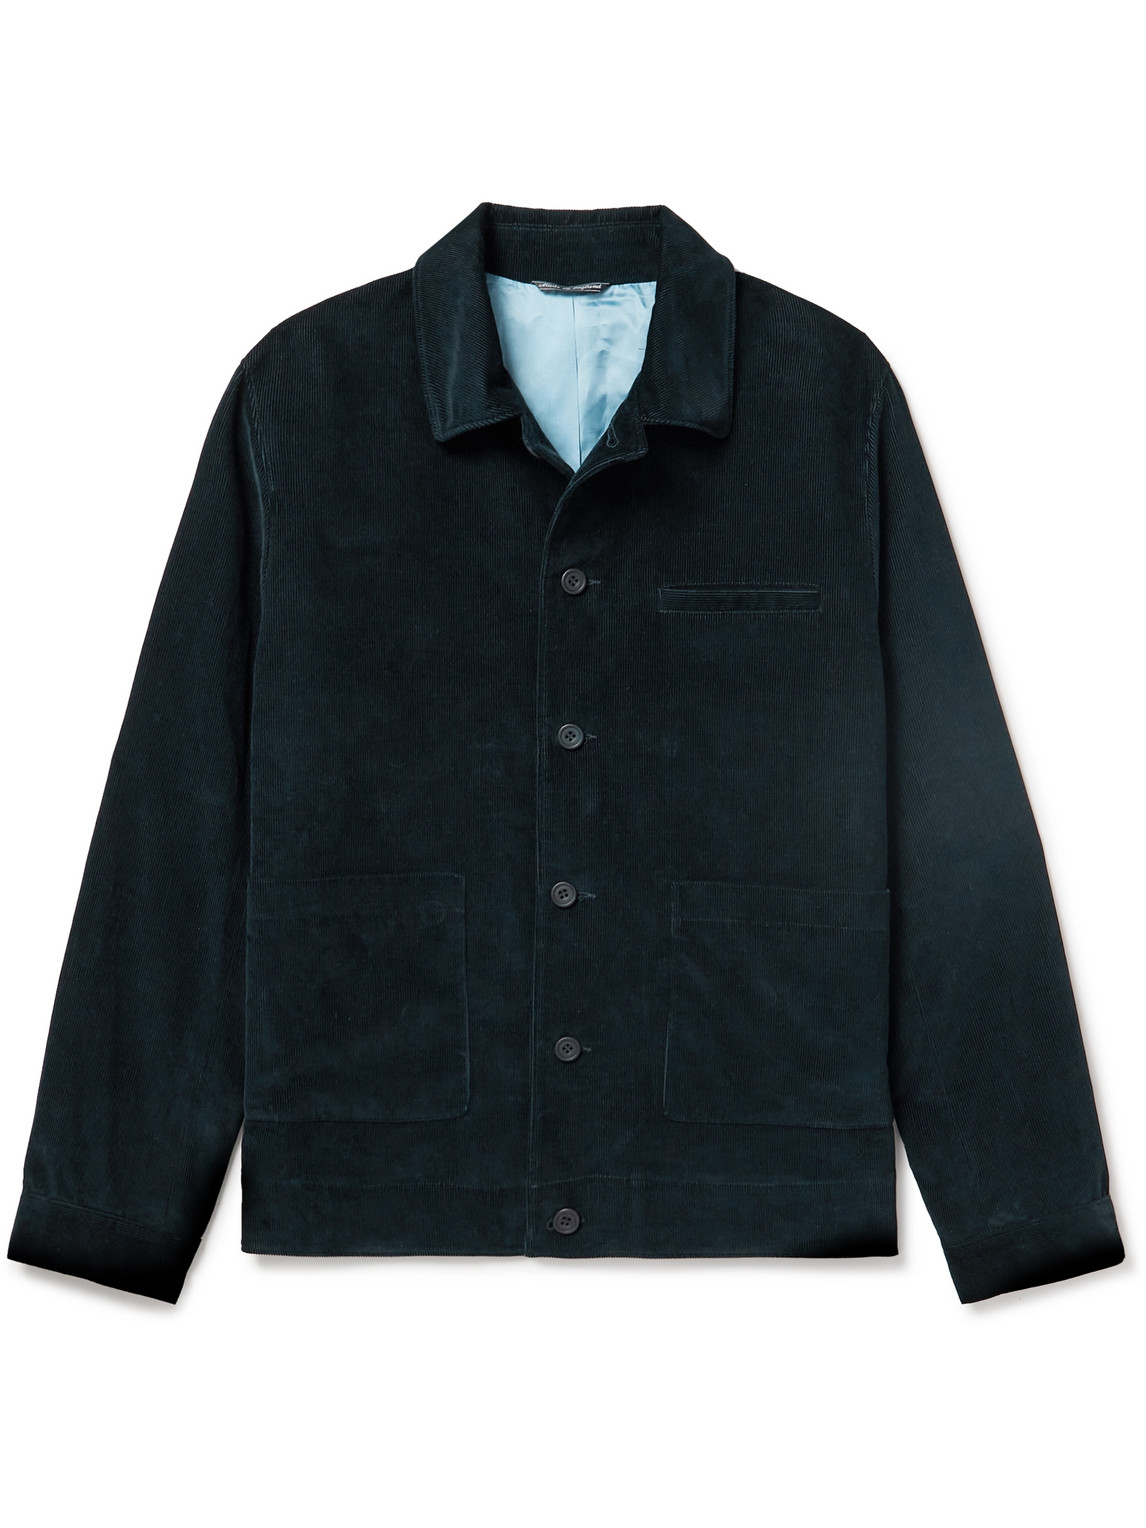 Cotton-Corduroy Chore Jacket